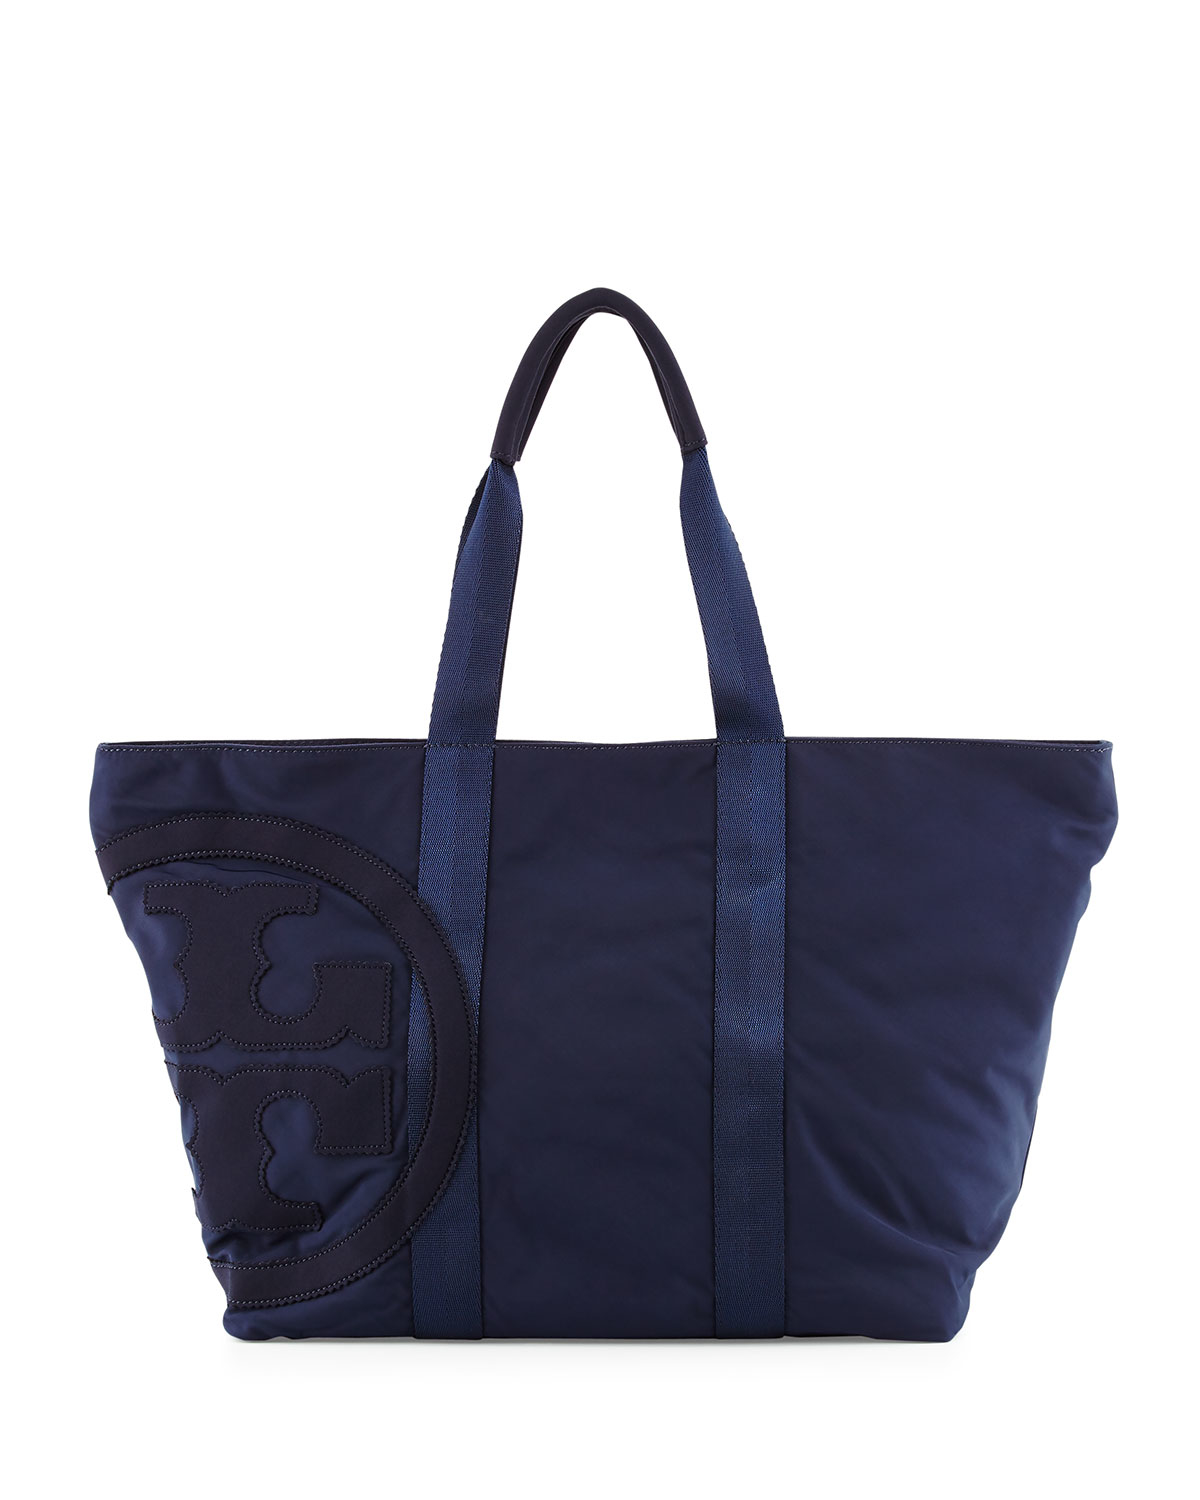 Lyst - Tory Burch Penn Nylon Logo Zip Tote Bag in Blue